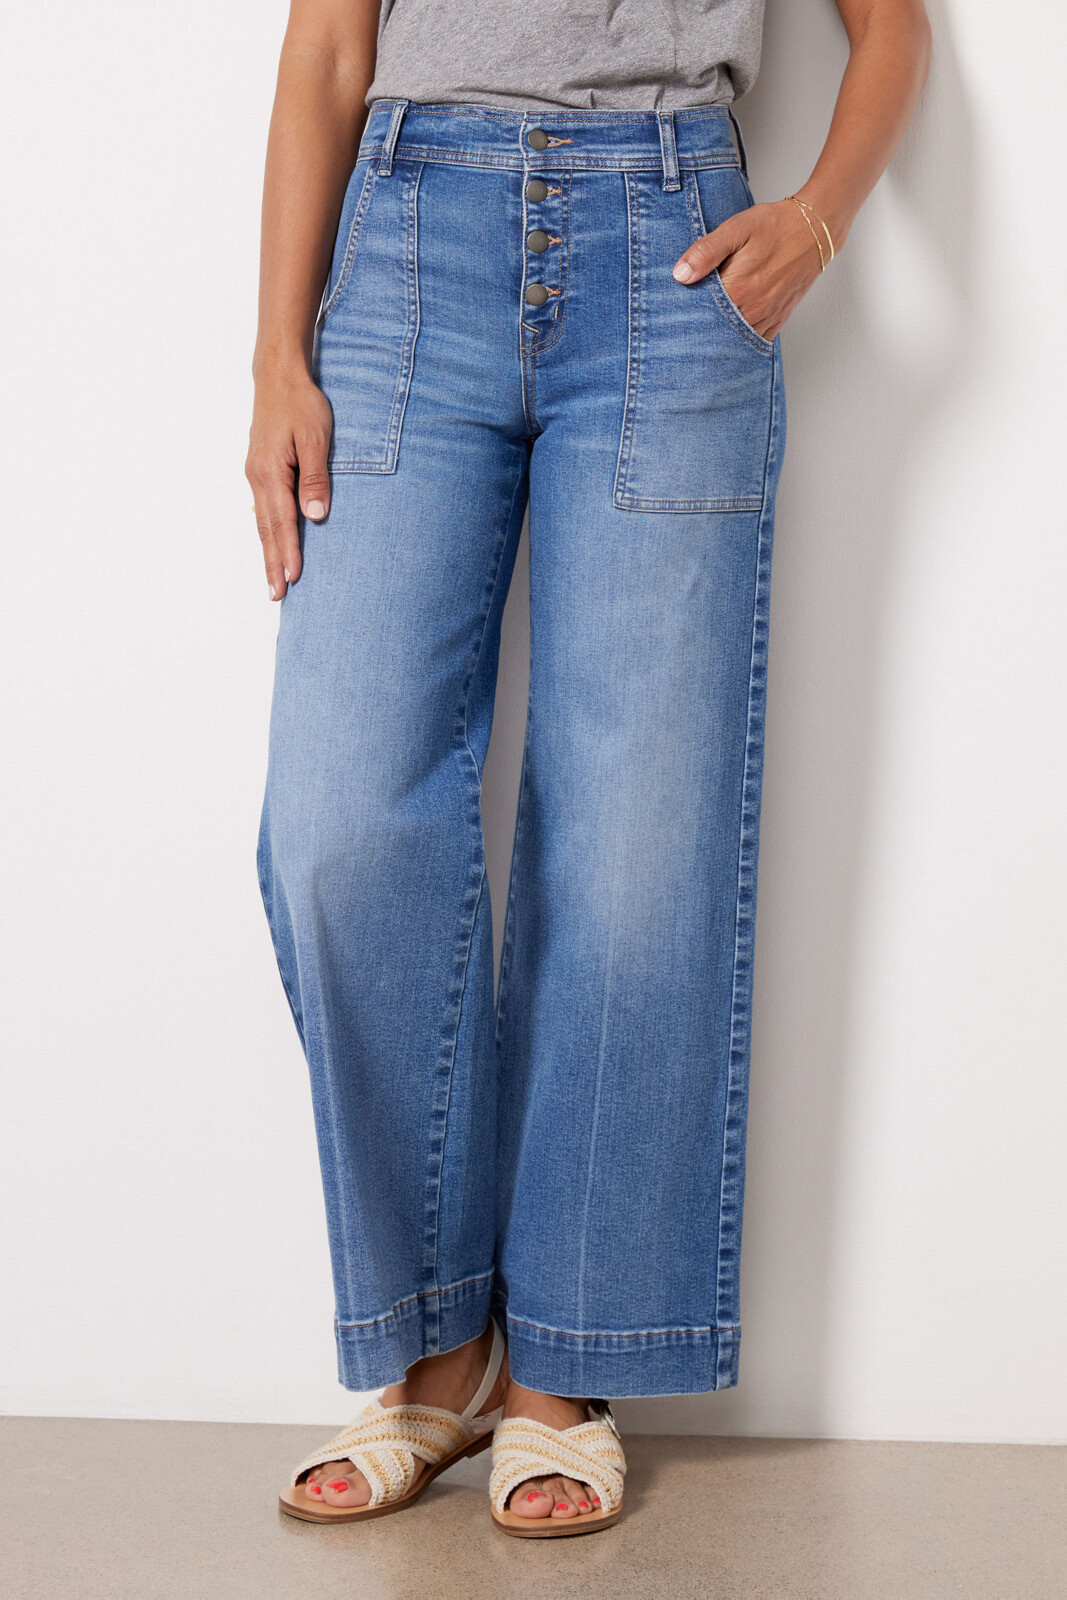 Seamed Front Wide Leg Jeans, Vintage Indigo – Spanx